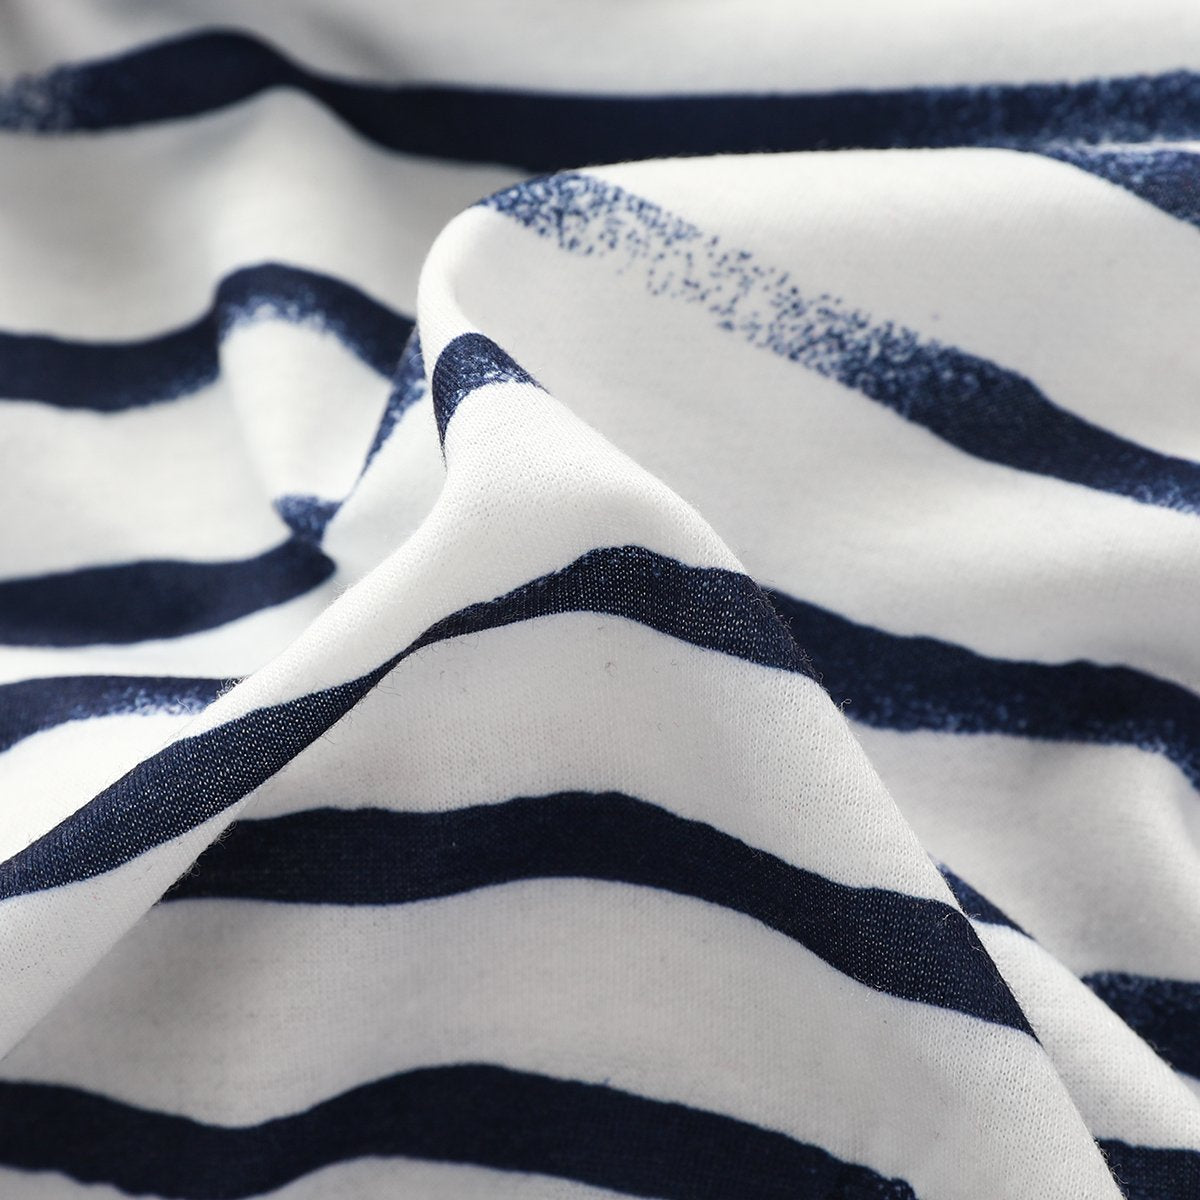 Baby Striped Animal Printed Long Sleeve Romper baby clothing wholesale distributors